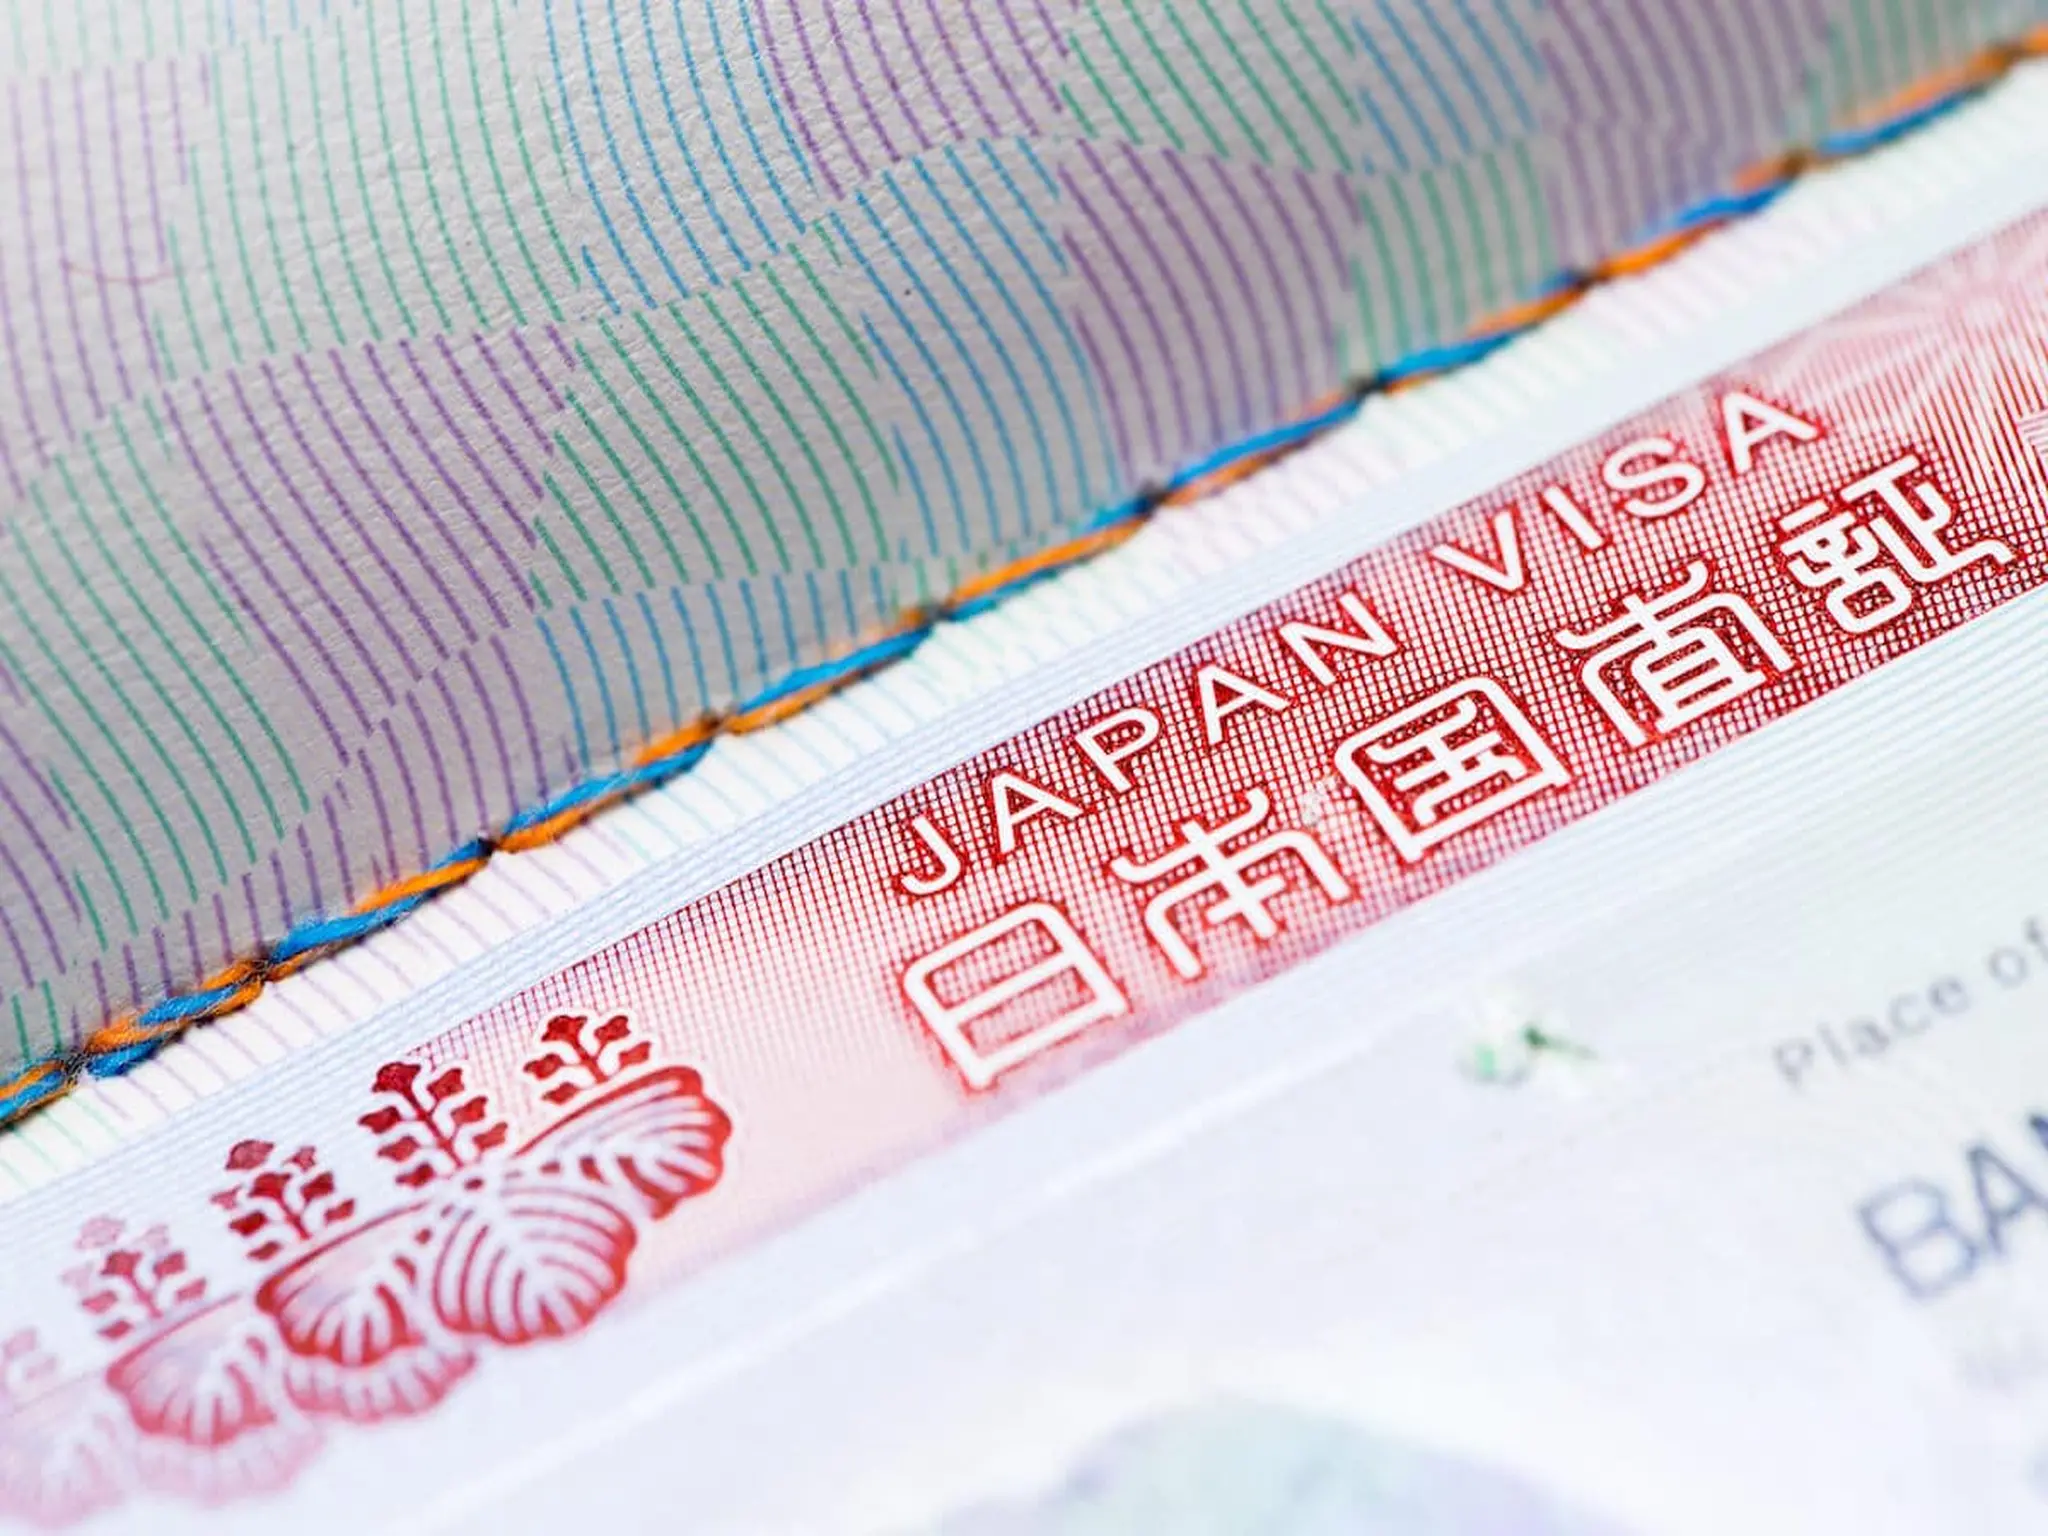 Japan begins facilitating procedures for obtaining a visa electronically